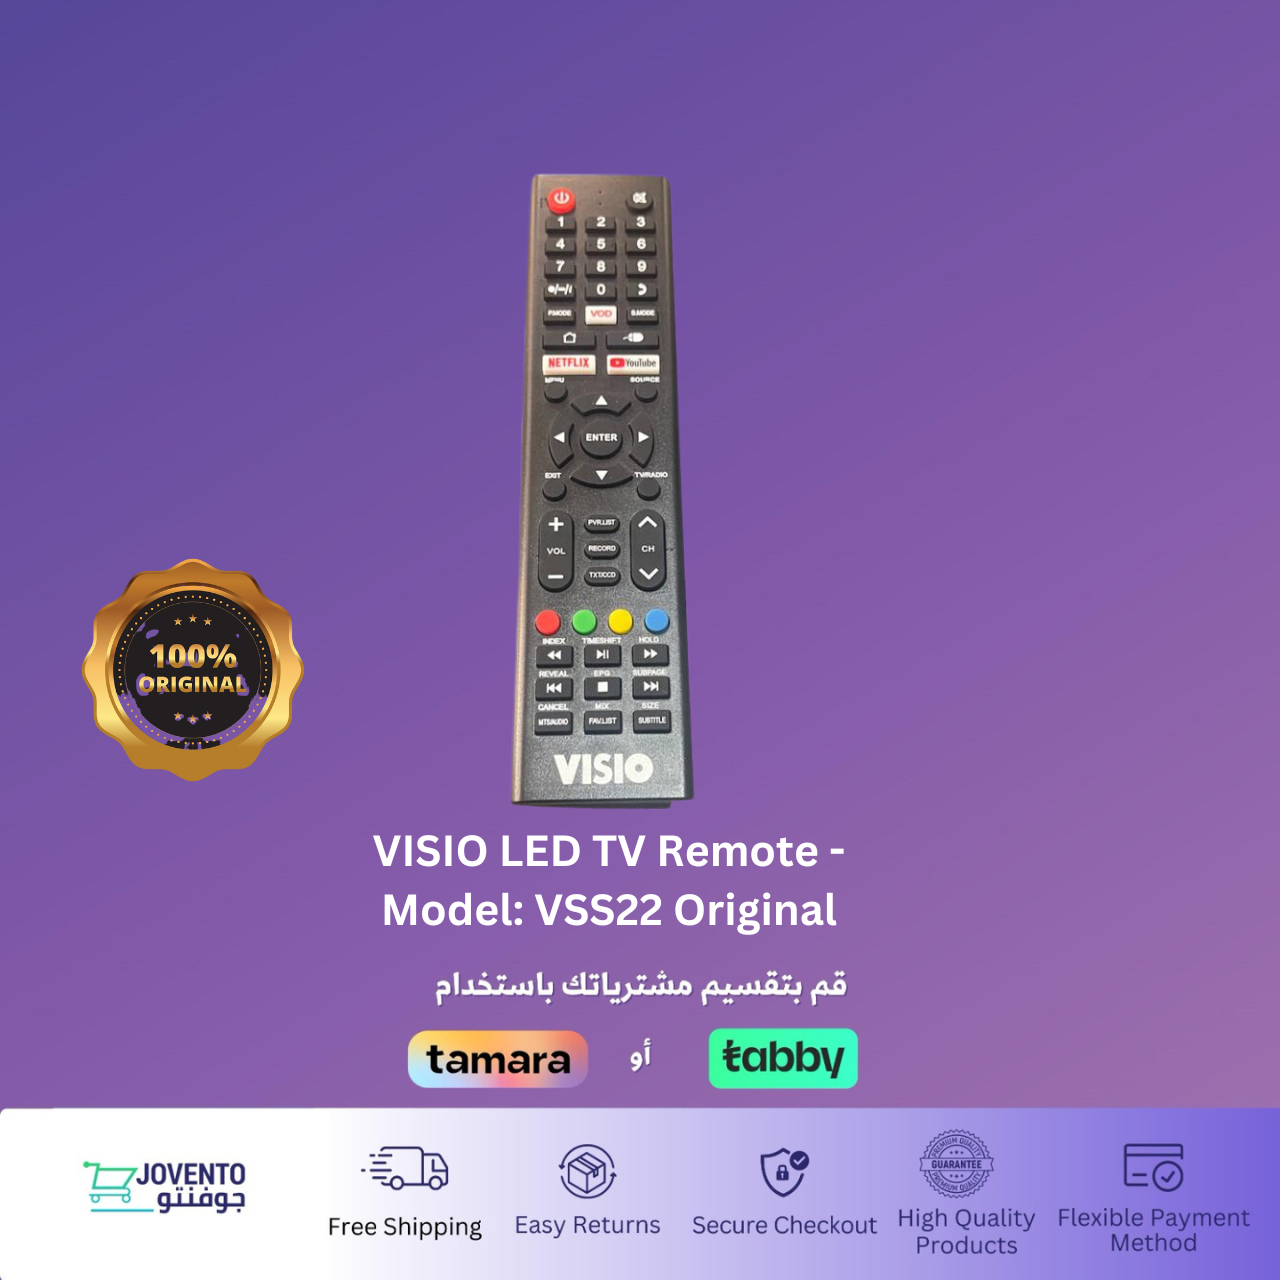 VISIO LED TV Remote - Model: VSS22 Original